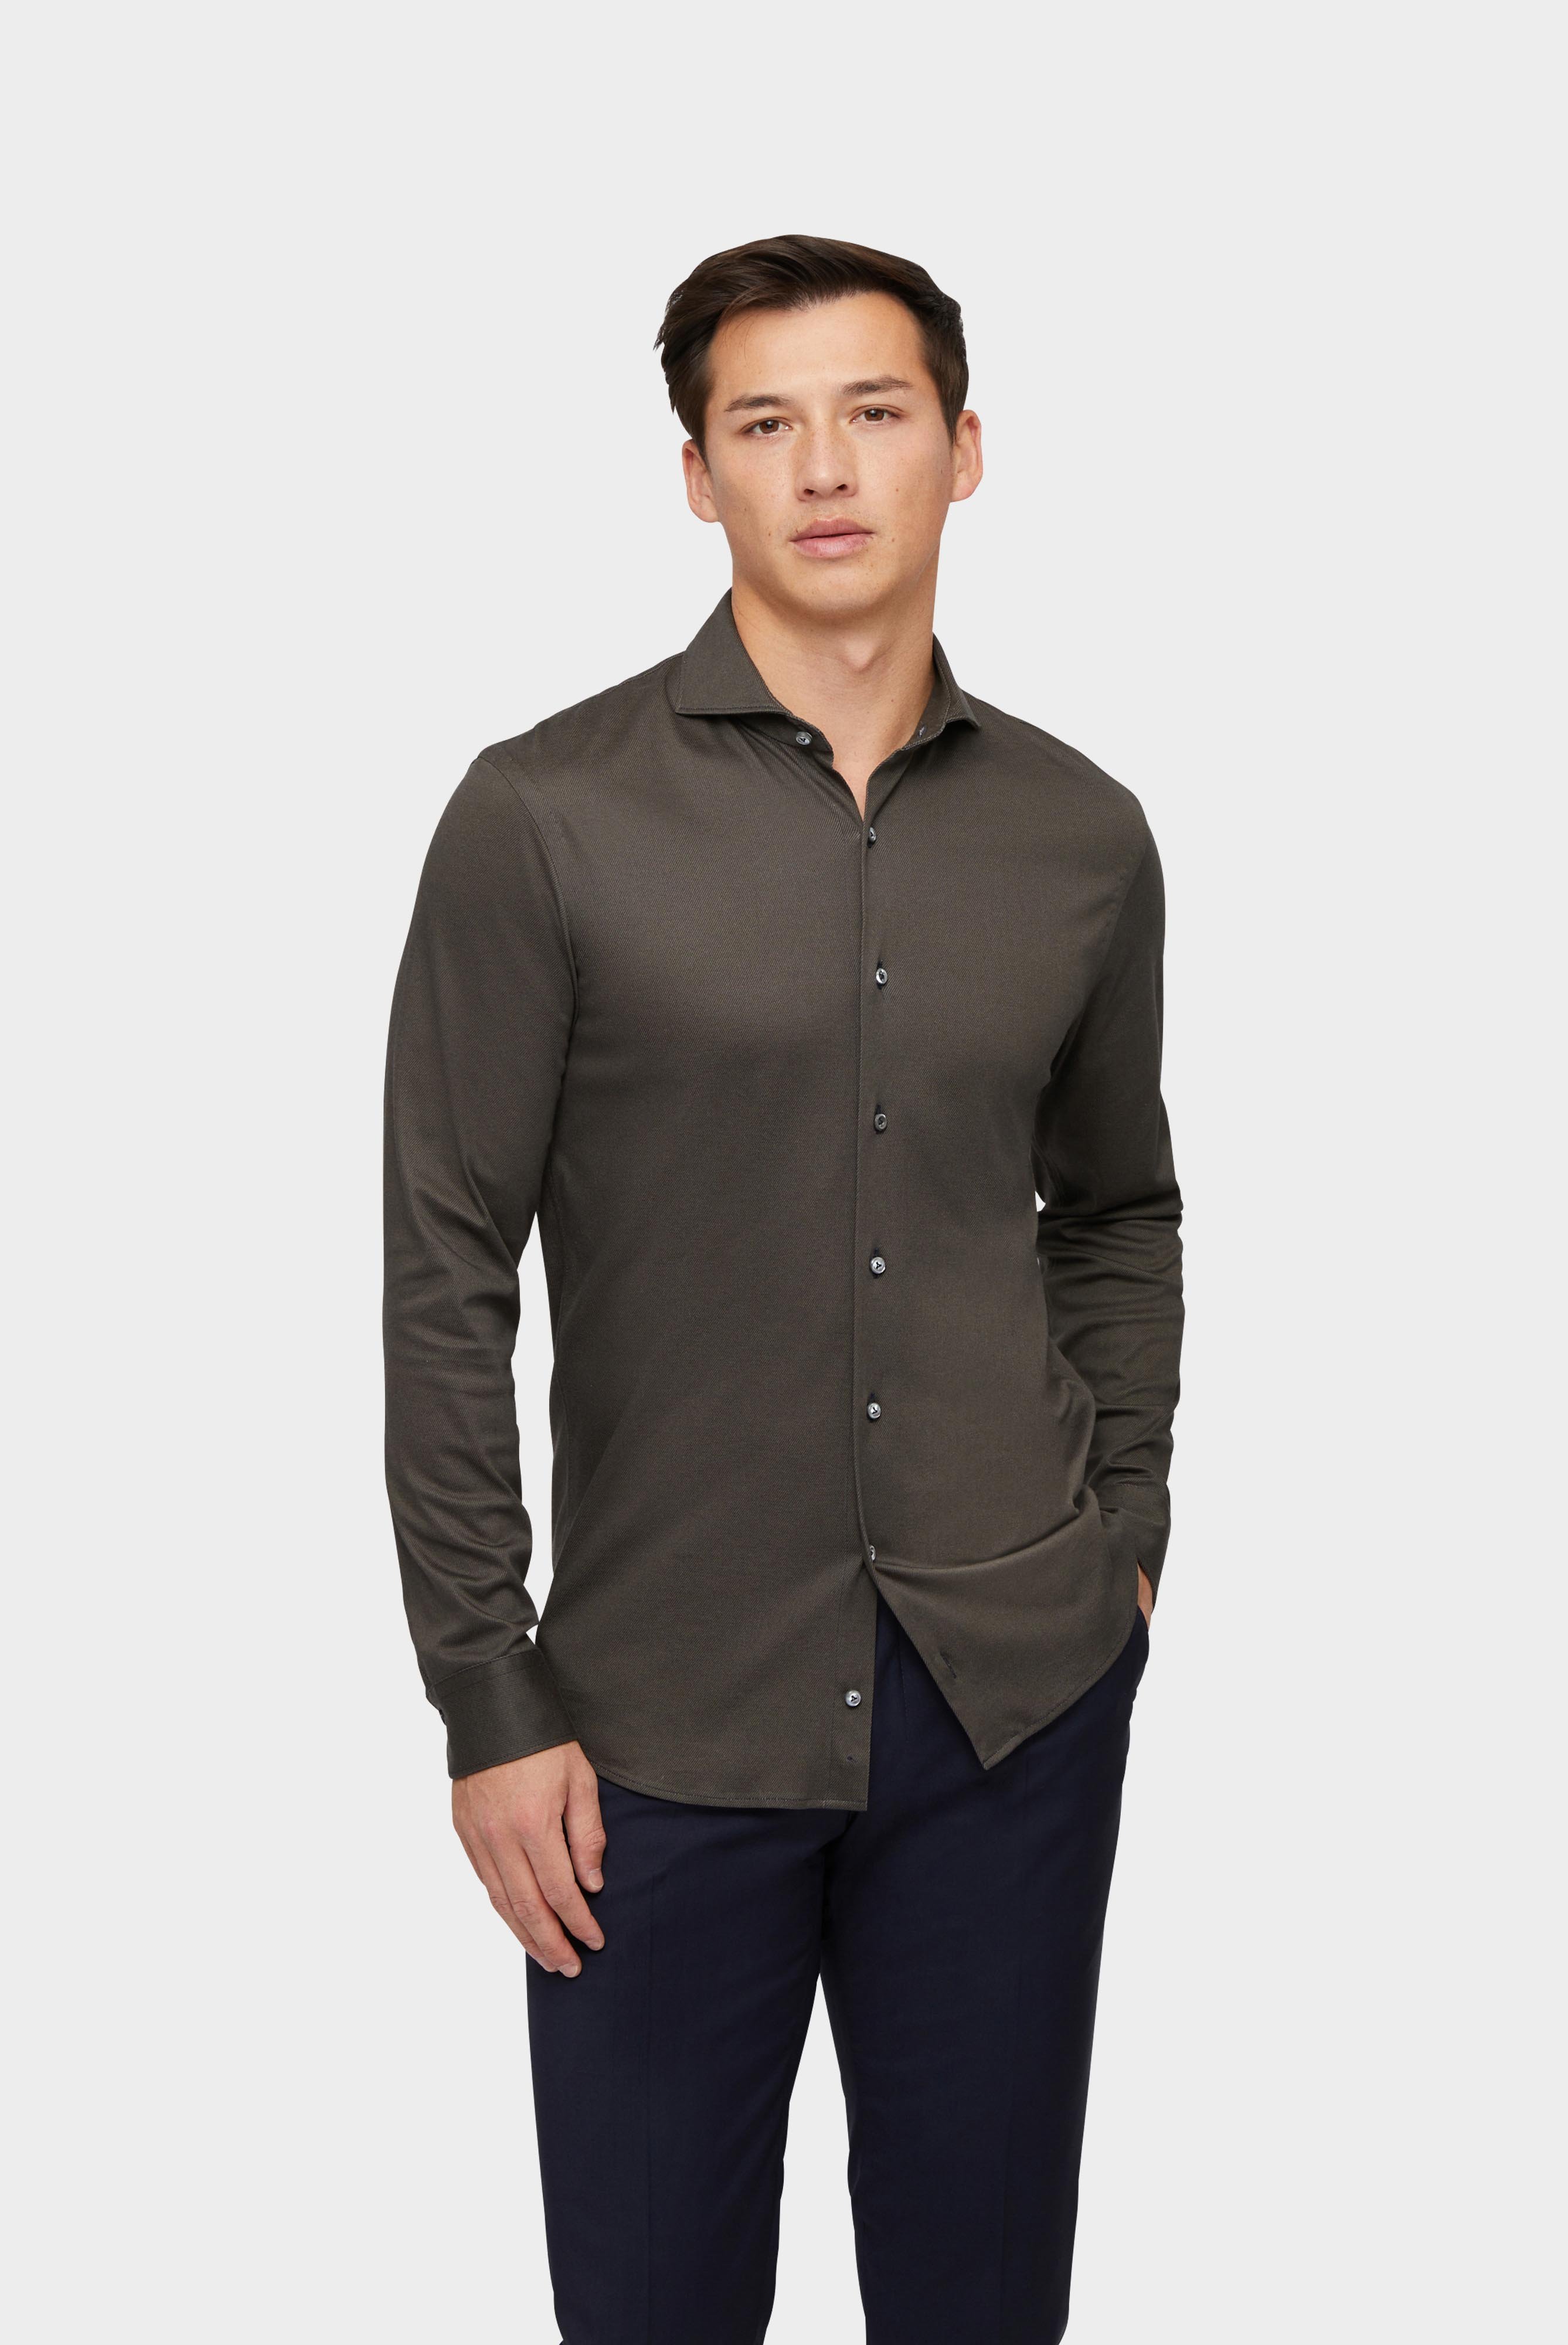 Casual Hemden+Jersey Hemd mit Twill Druck Tailor Fit+20.1683.UC.187749.970.L